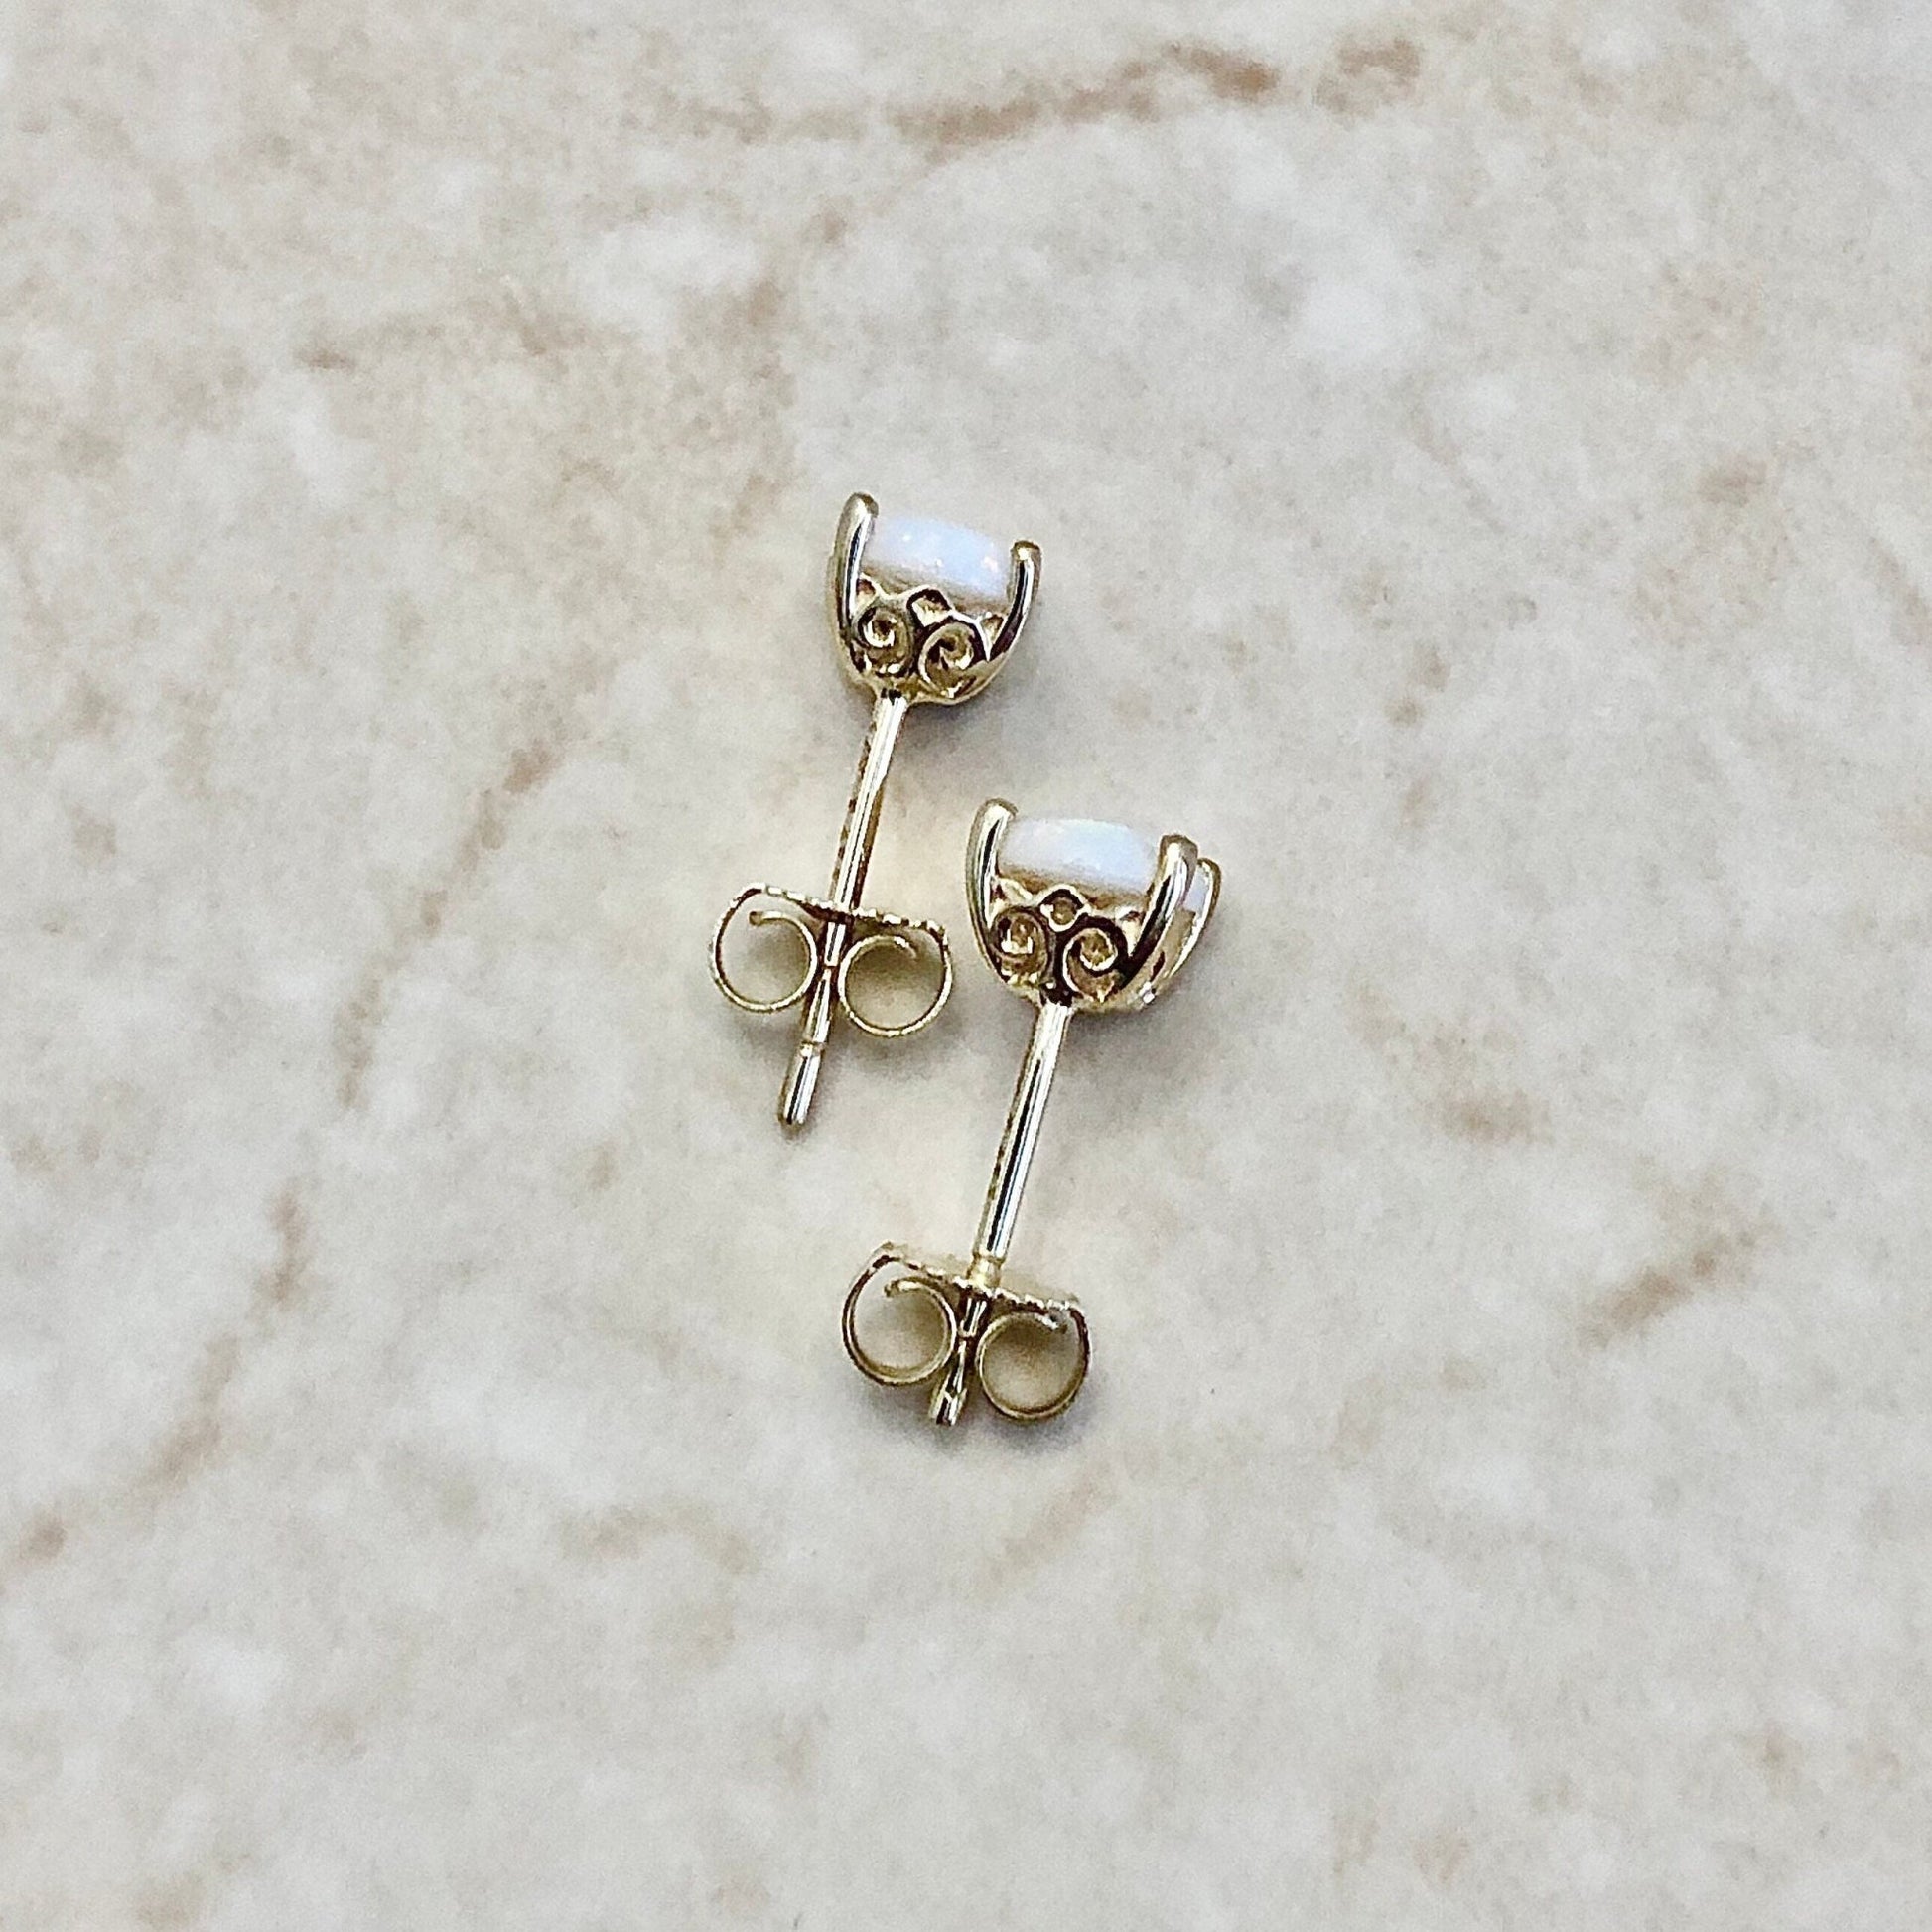 14K Oval Opal Stud Earrings - Yellow Gold Opal Studs - Gold Opal Earrings - Genuine Opal Earrings - October Birthstone Gift For Her